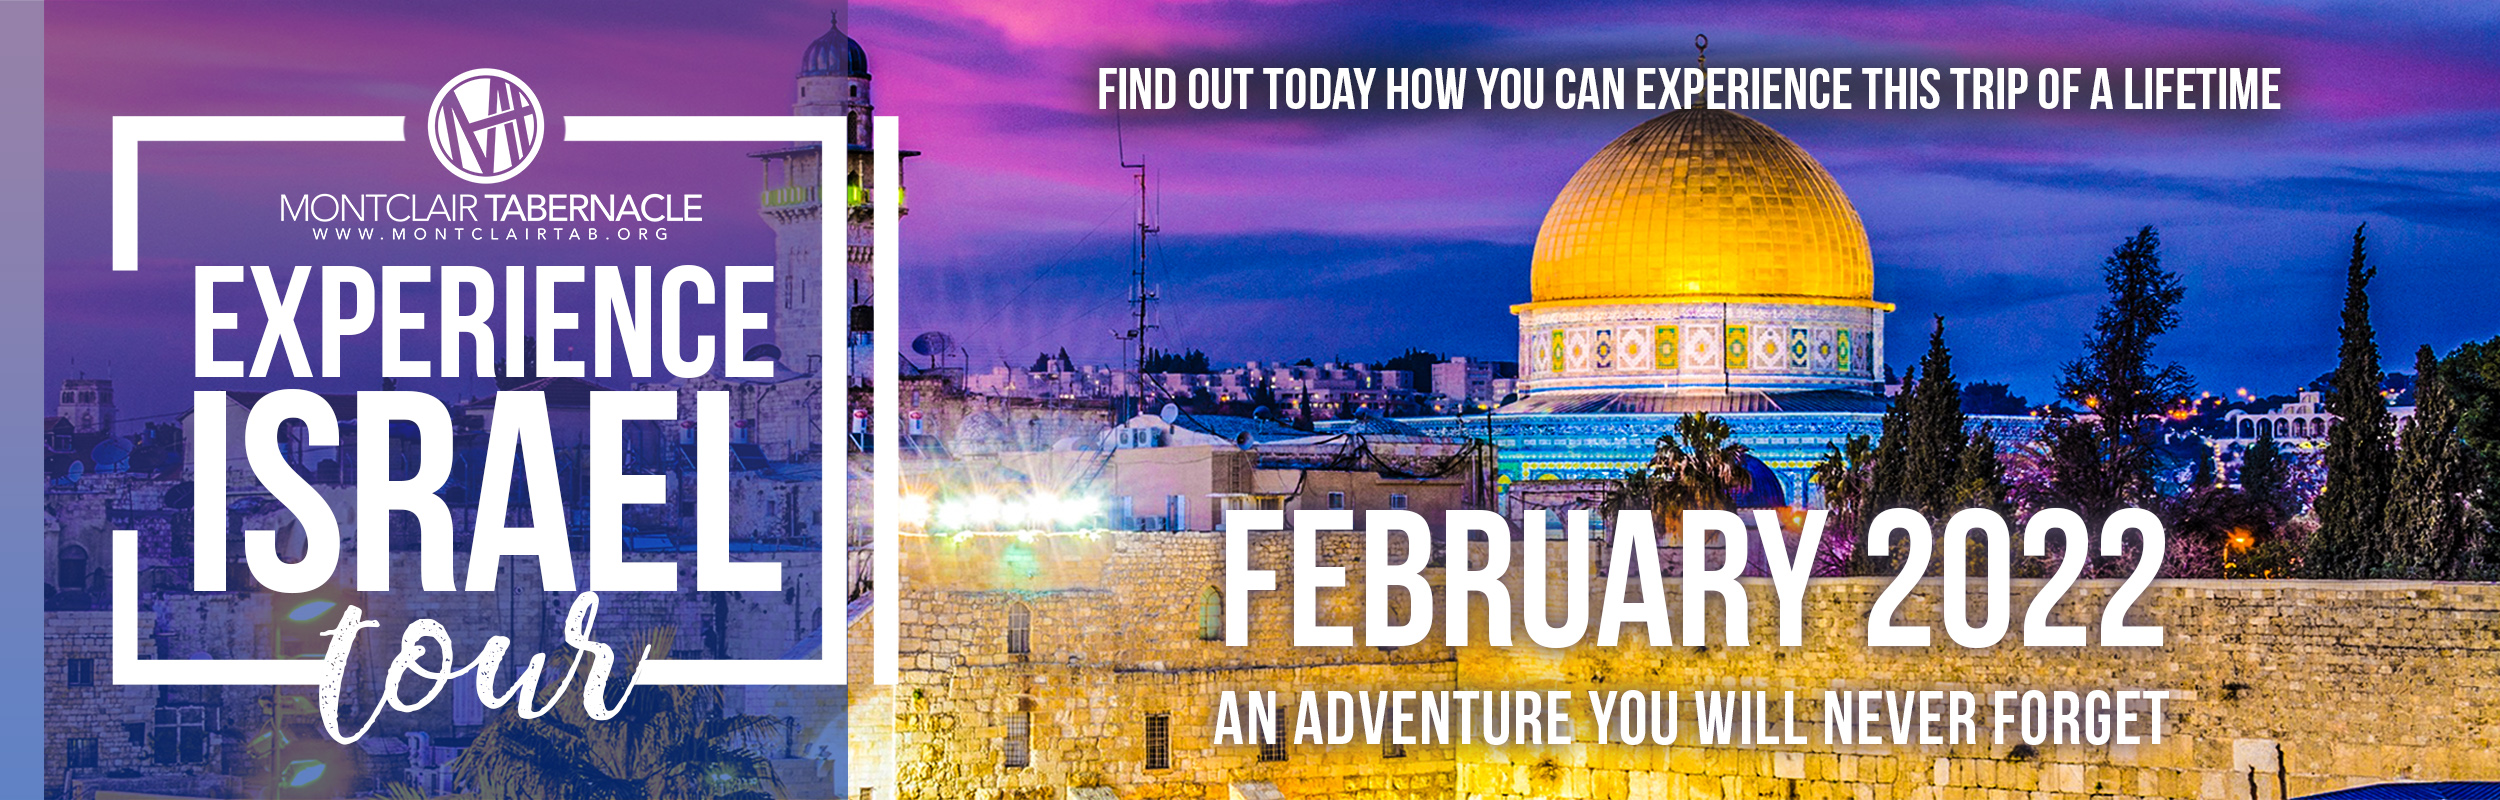 Experience Israel Tour Montclair Tabernacle